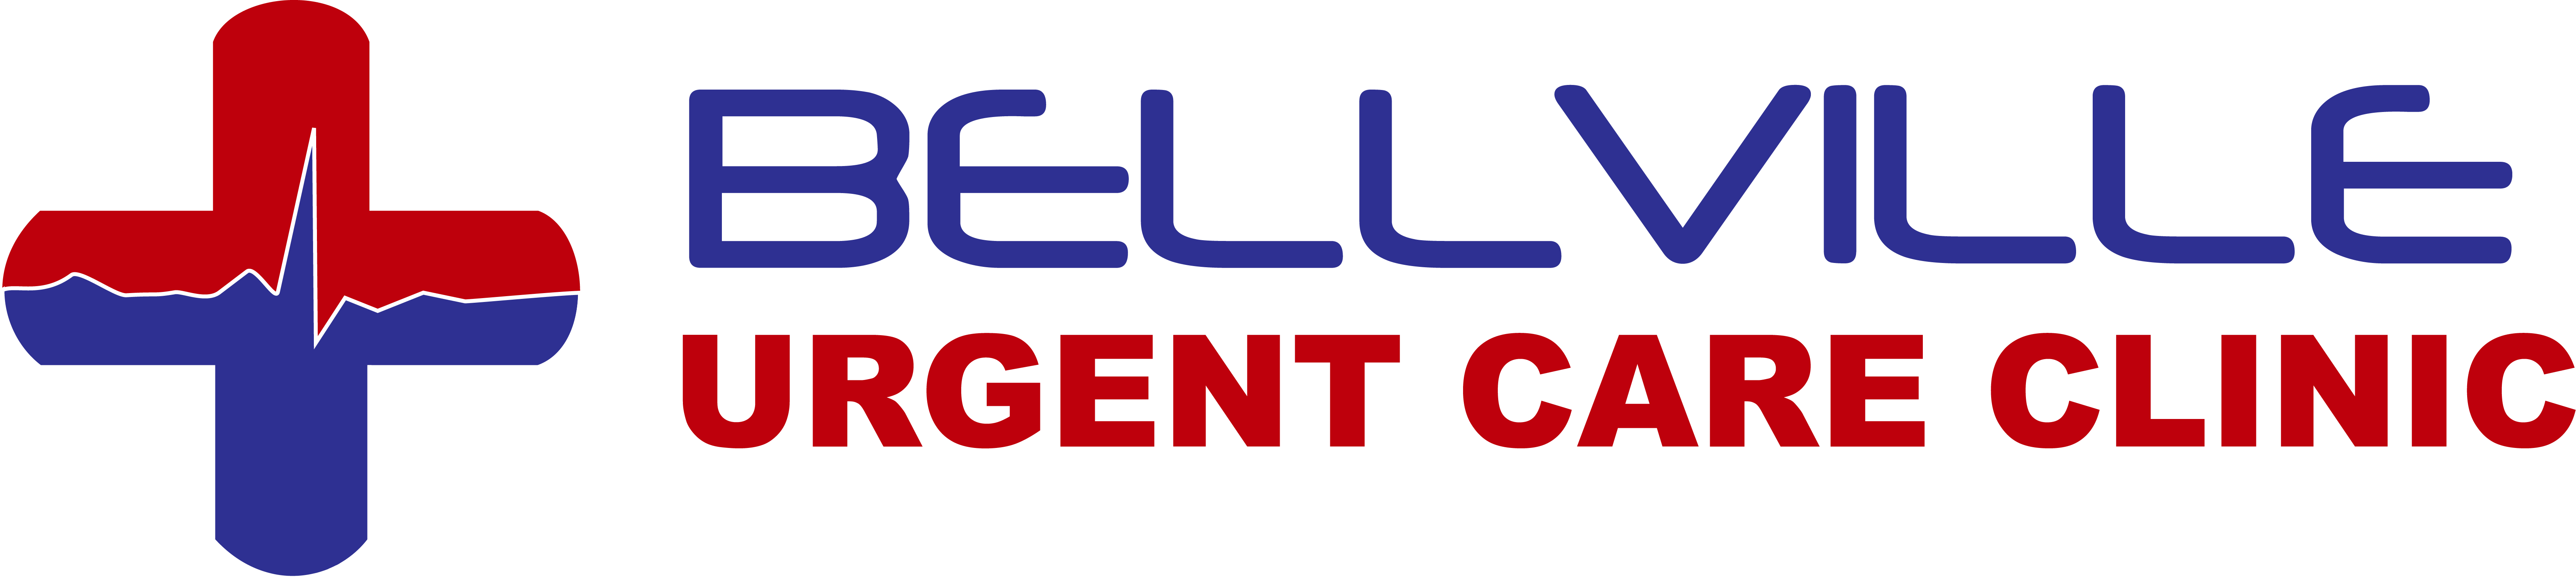 Bellville Urgent Care Clinic Logo